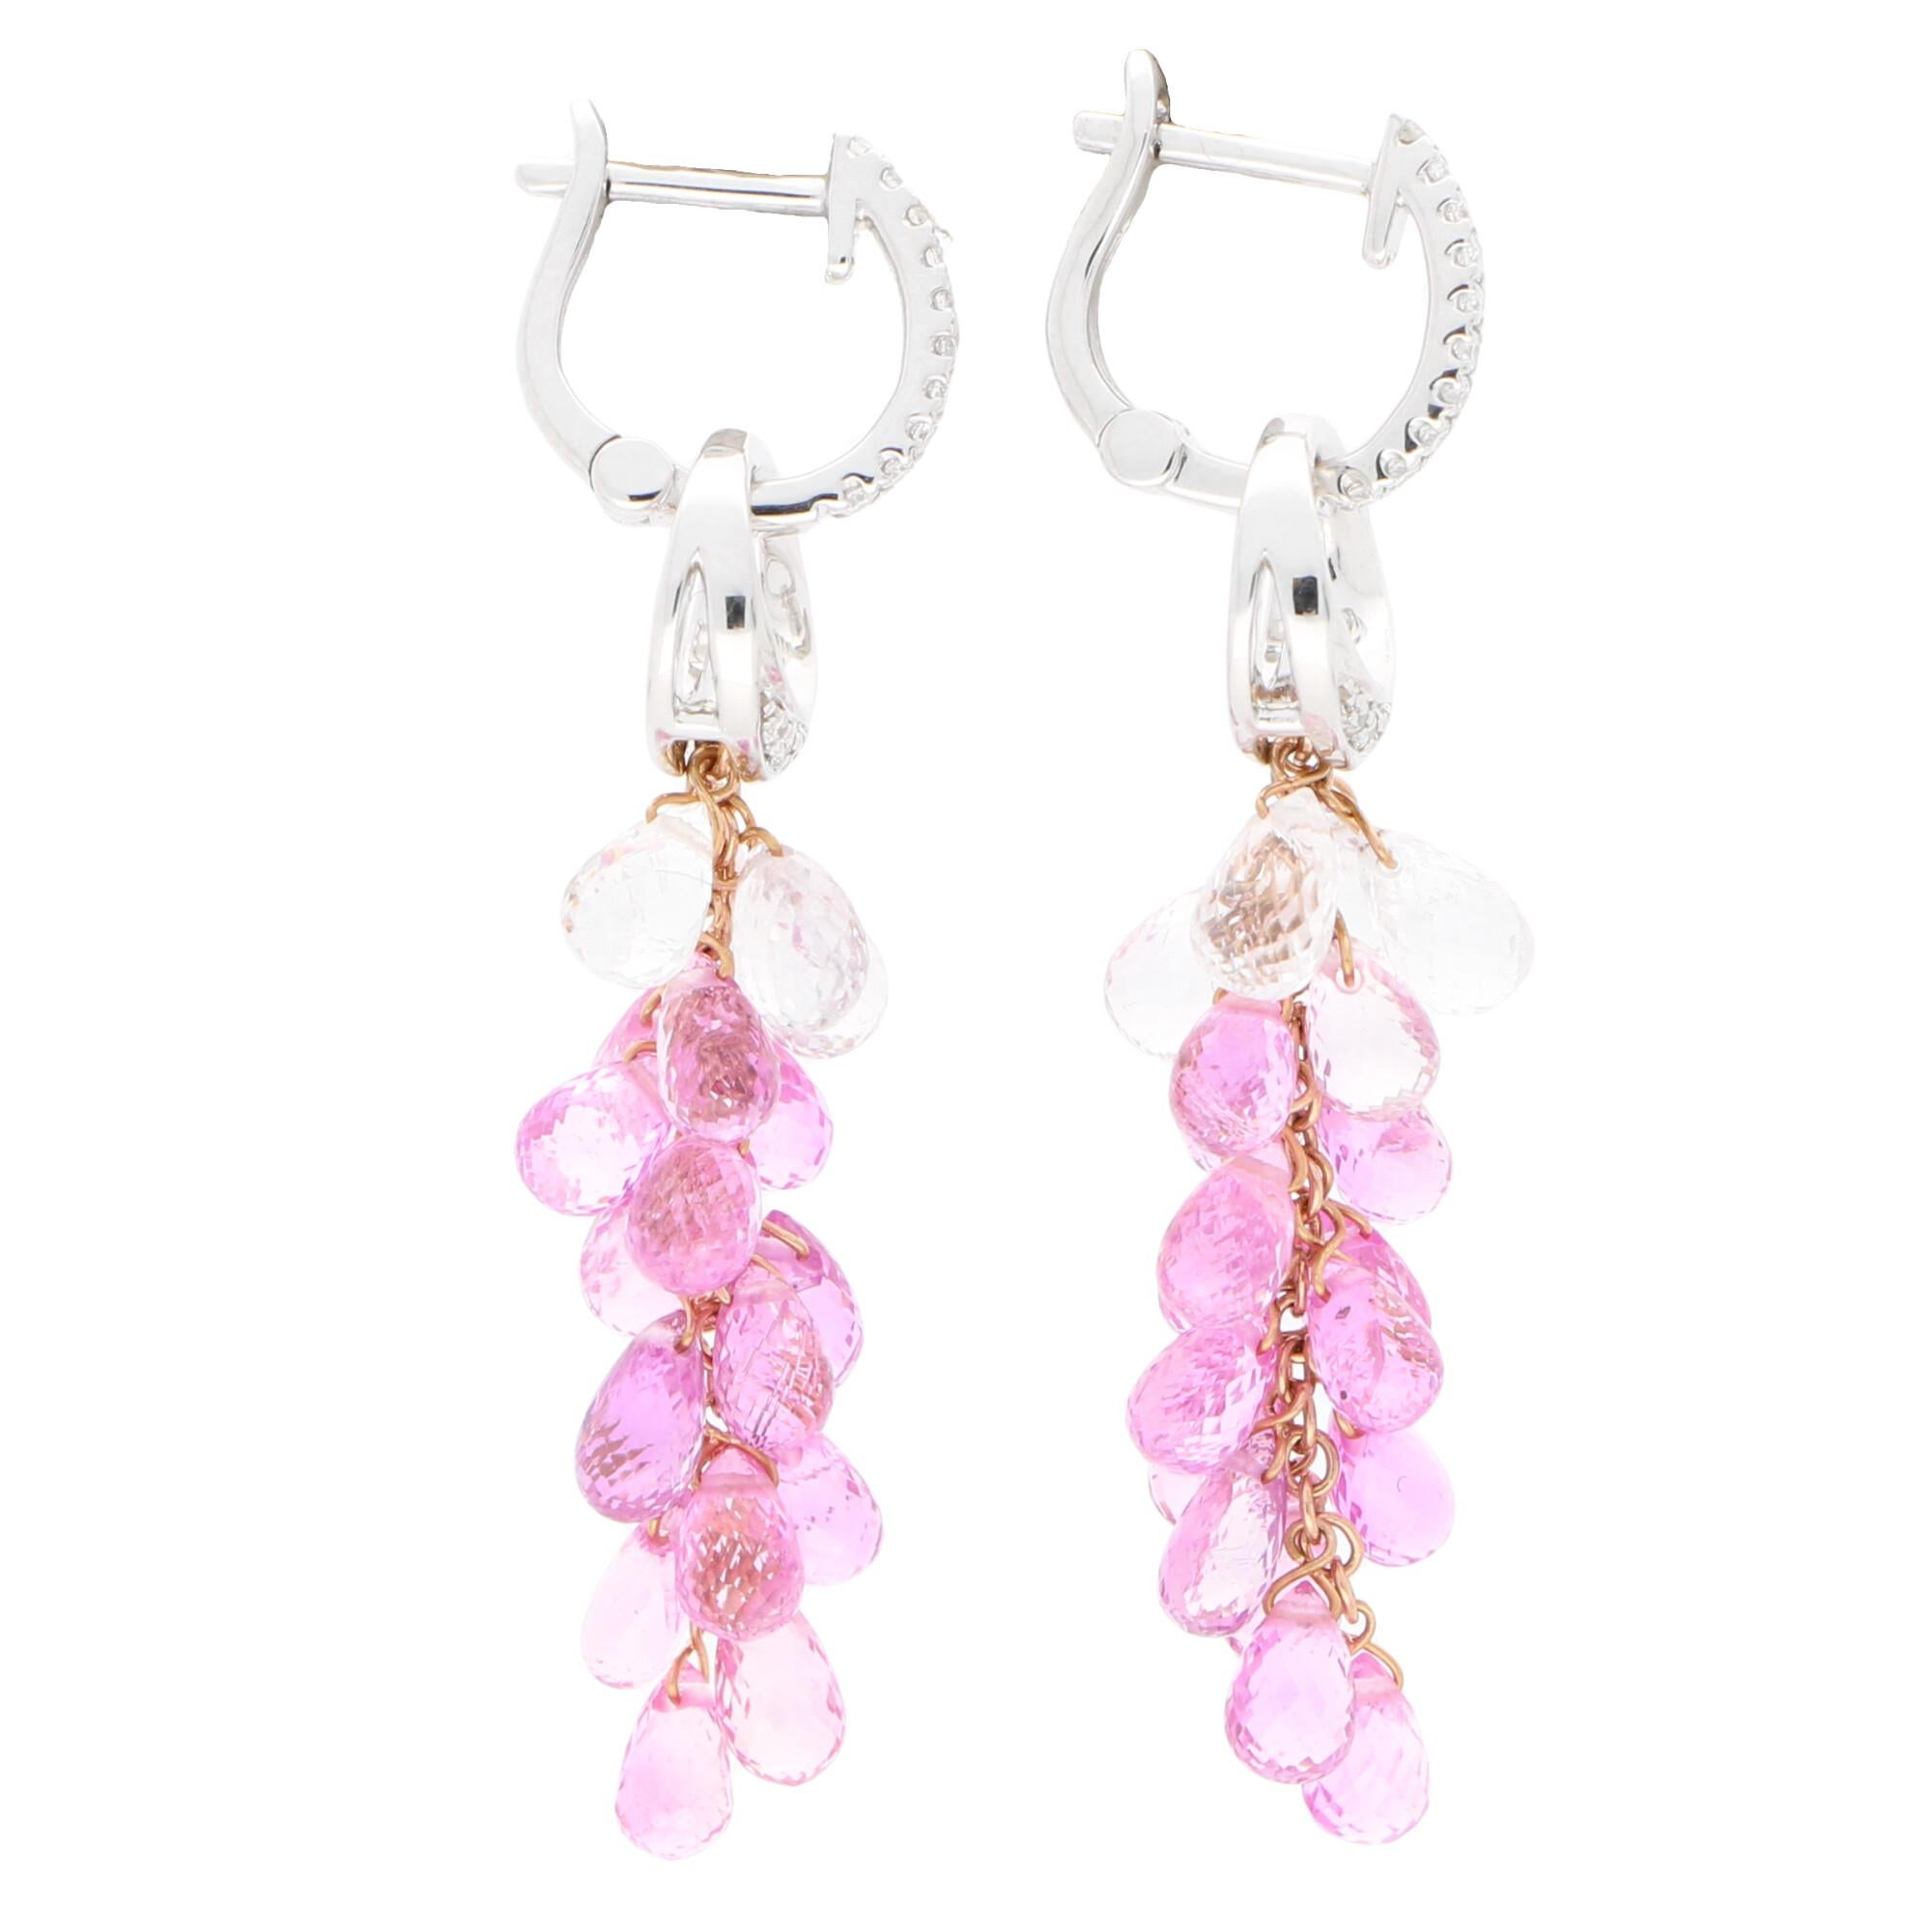 Briolette Cut Briolette Pink Sapphire and Diamond Convertible Drop Earrings Set in 18k Gold